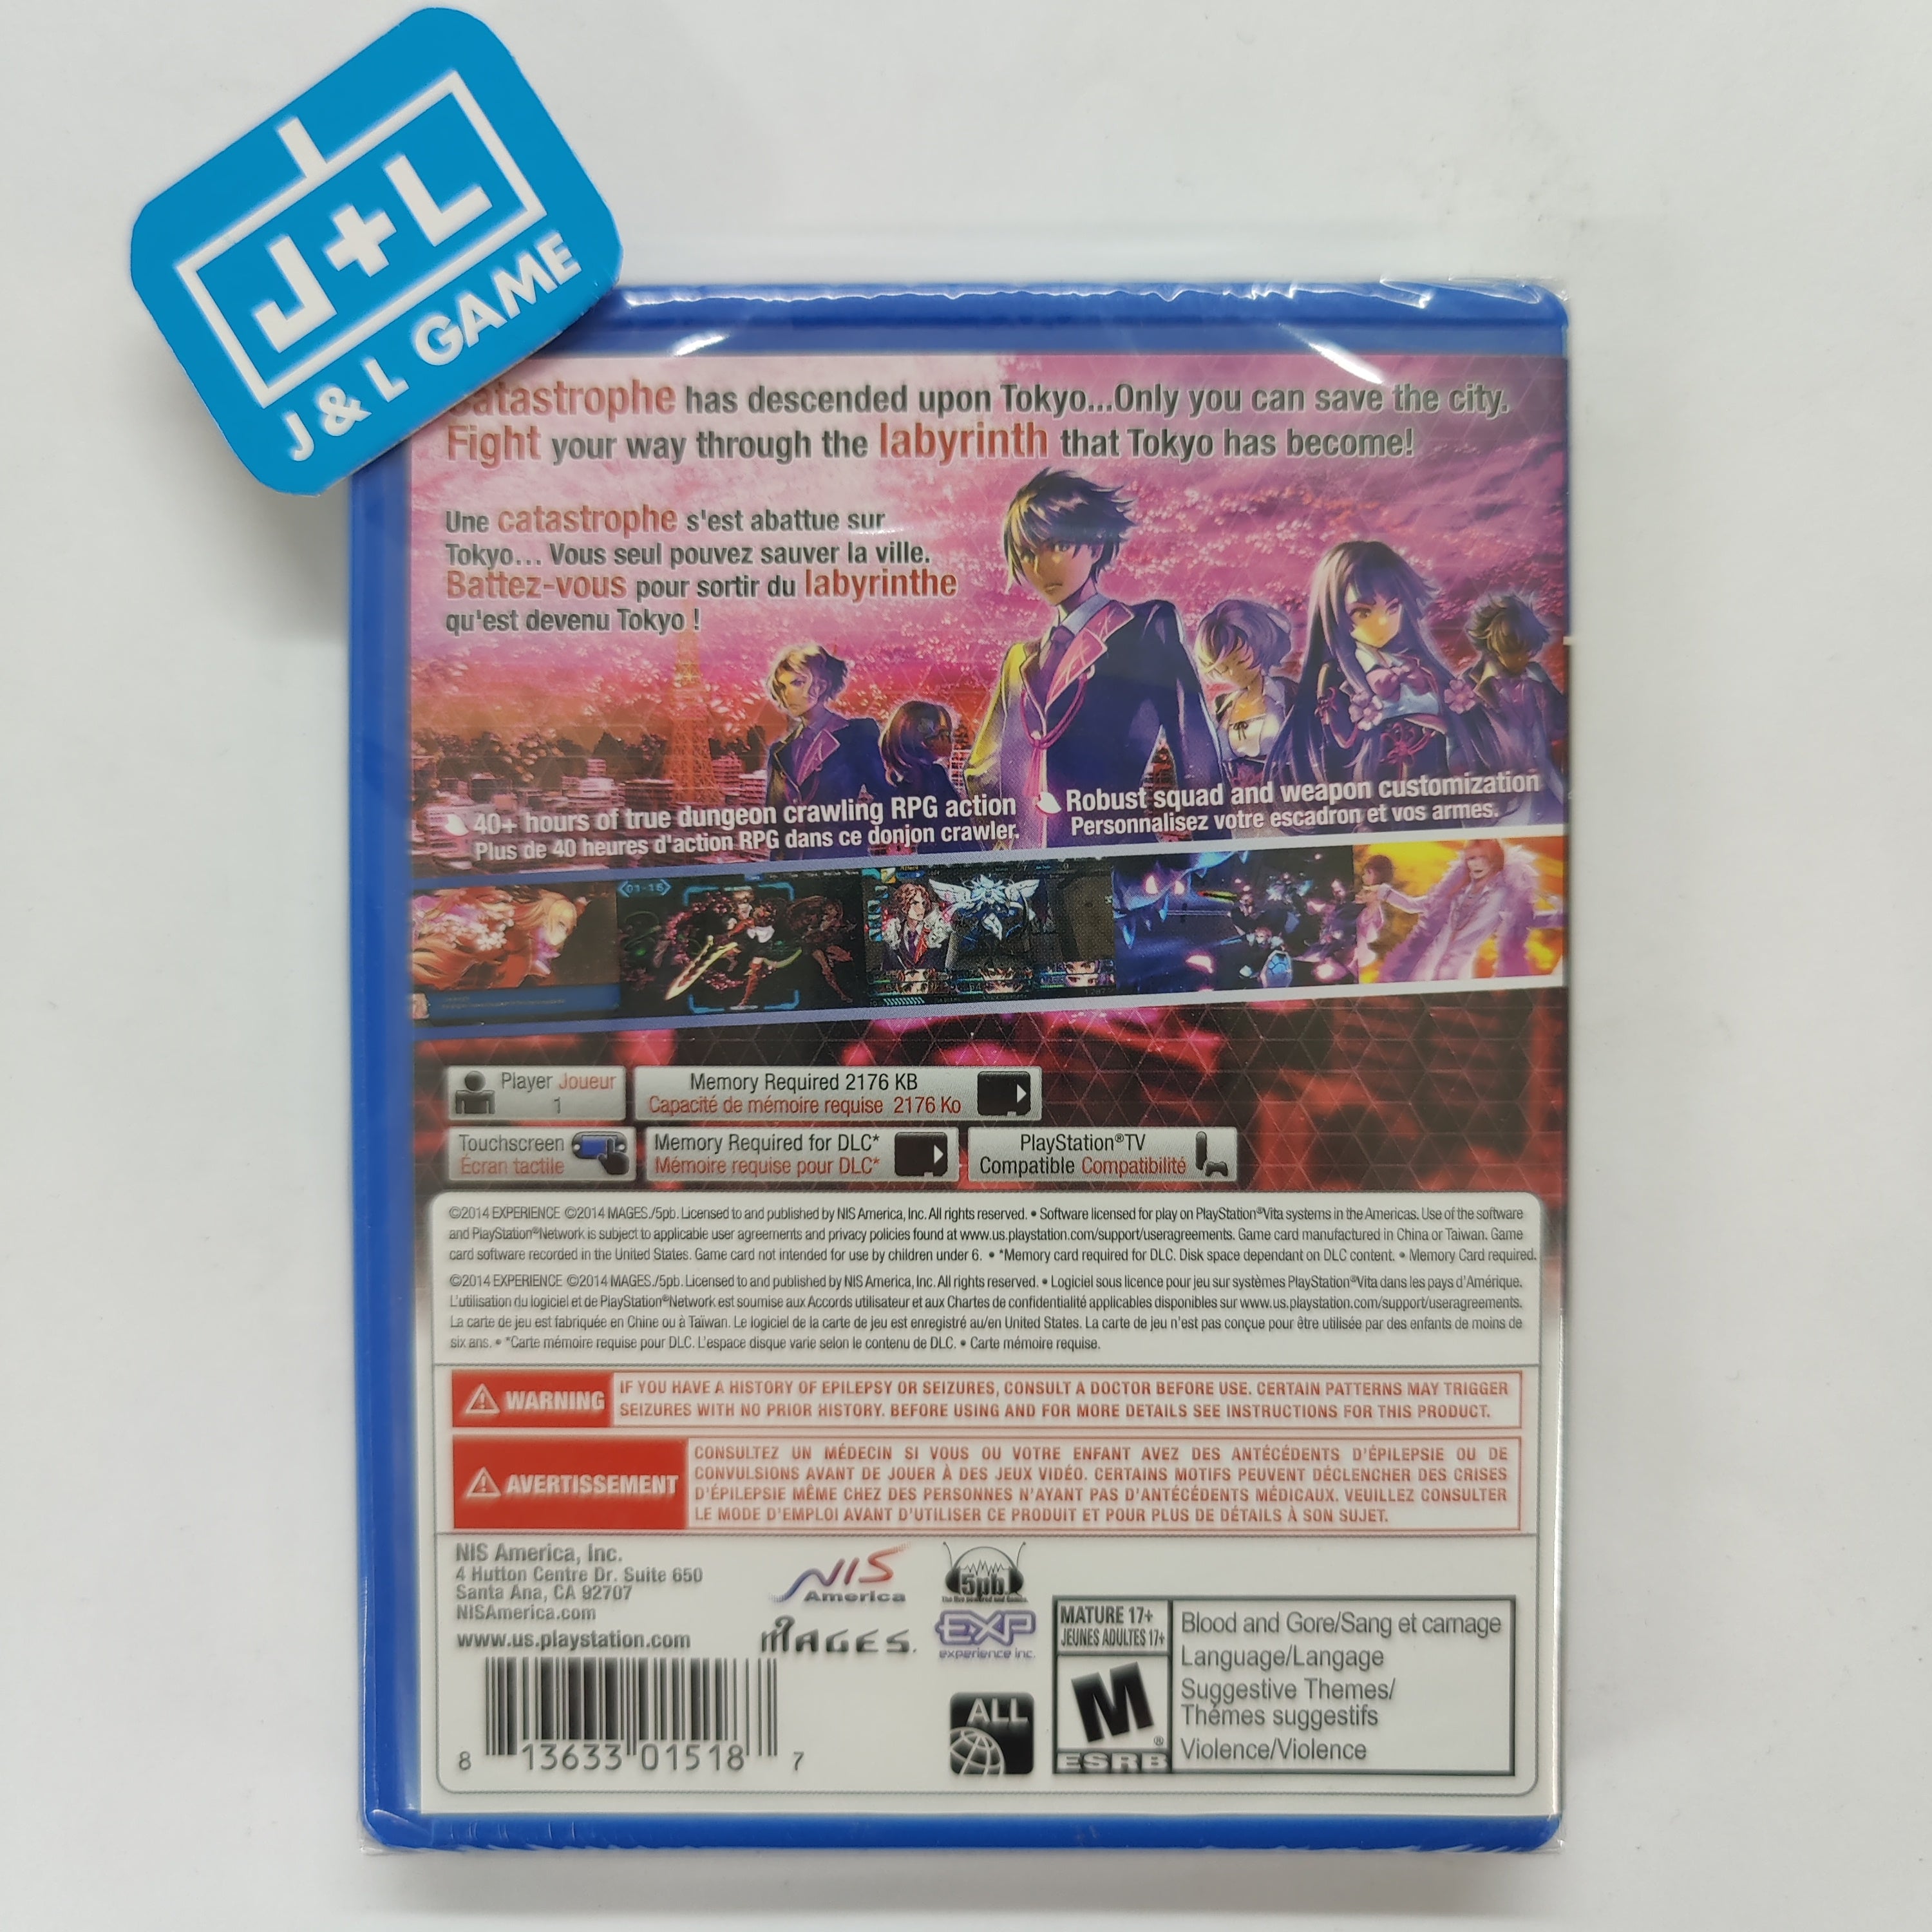 Operation Abyss: New Tokyo Legacy - (PSV) PlayStation Vita Video Games NIS America   